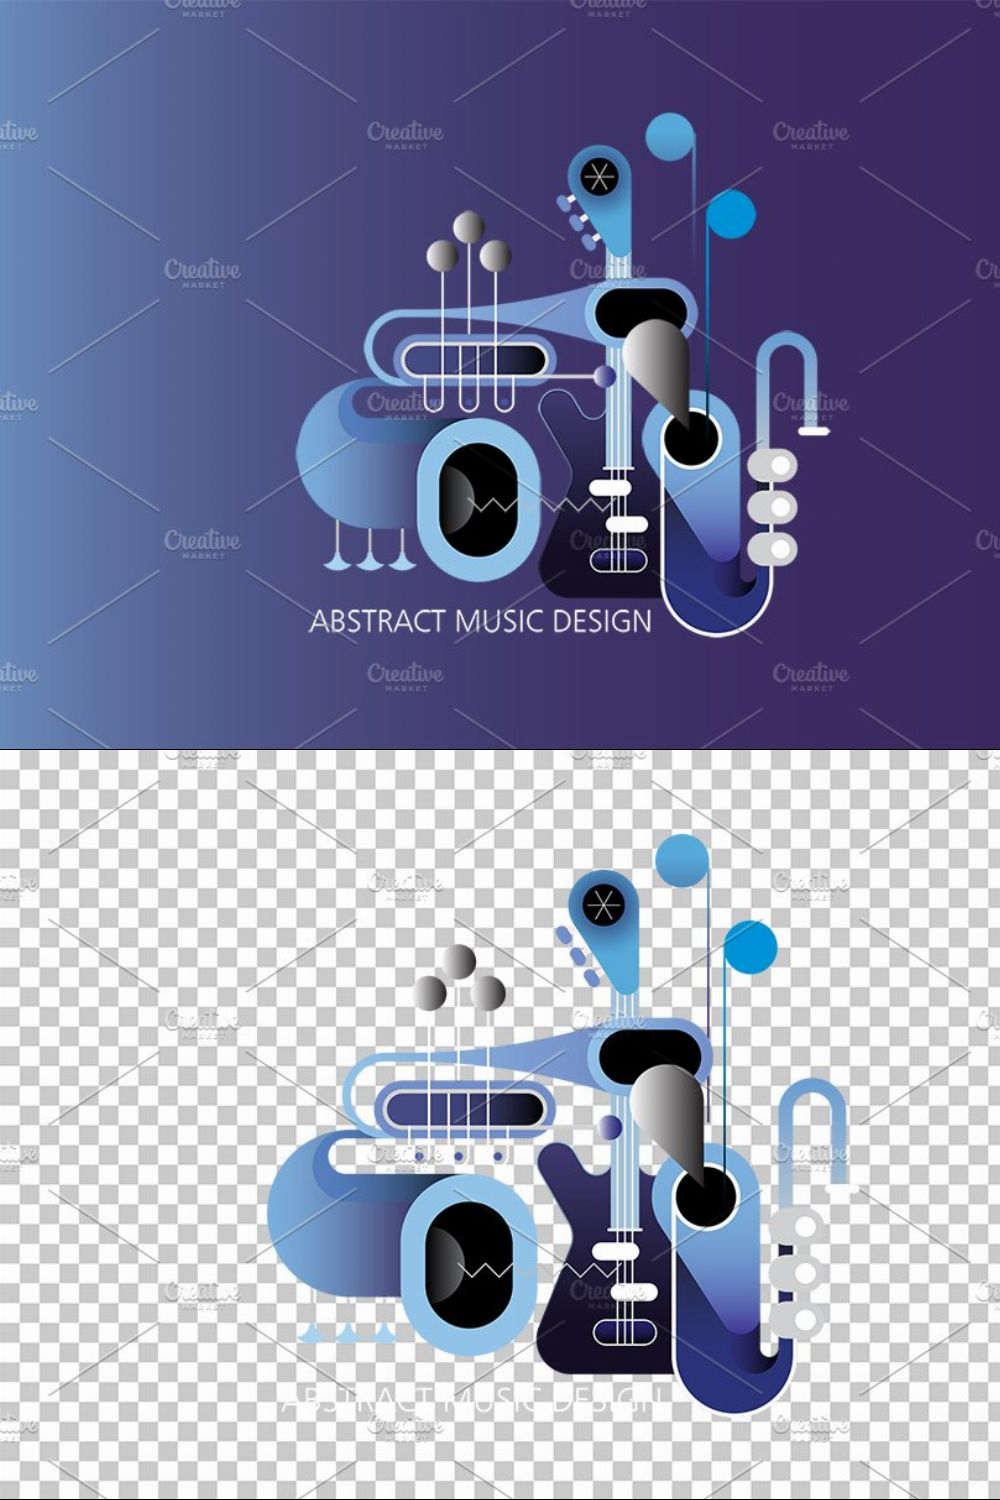 Concept Music Design on a blue pinterest preview image.